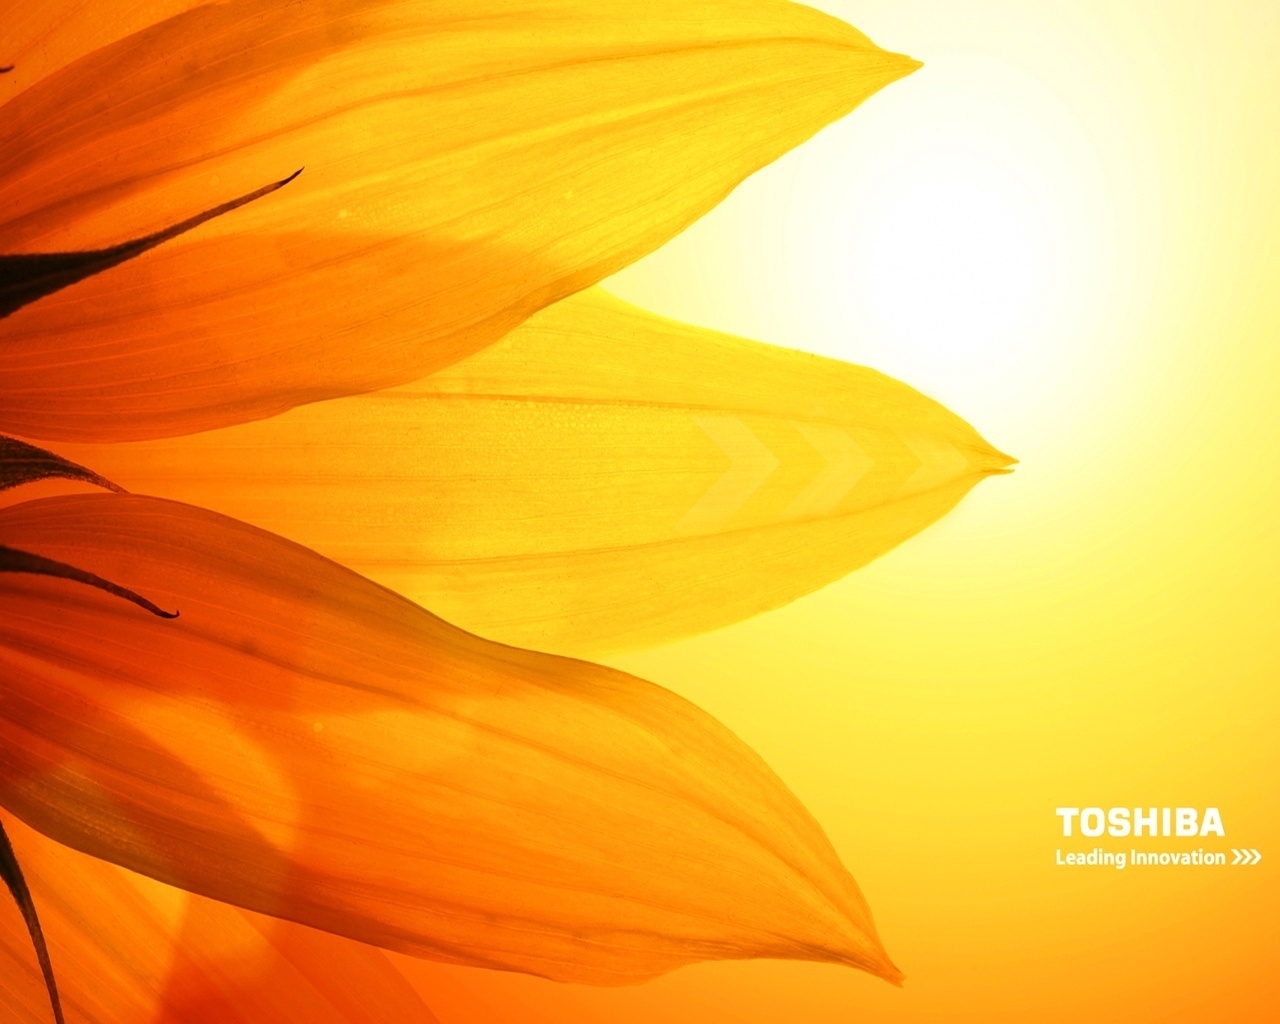 Toshiba sunflower for 1280 x 1024 resolution